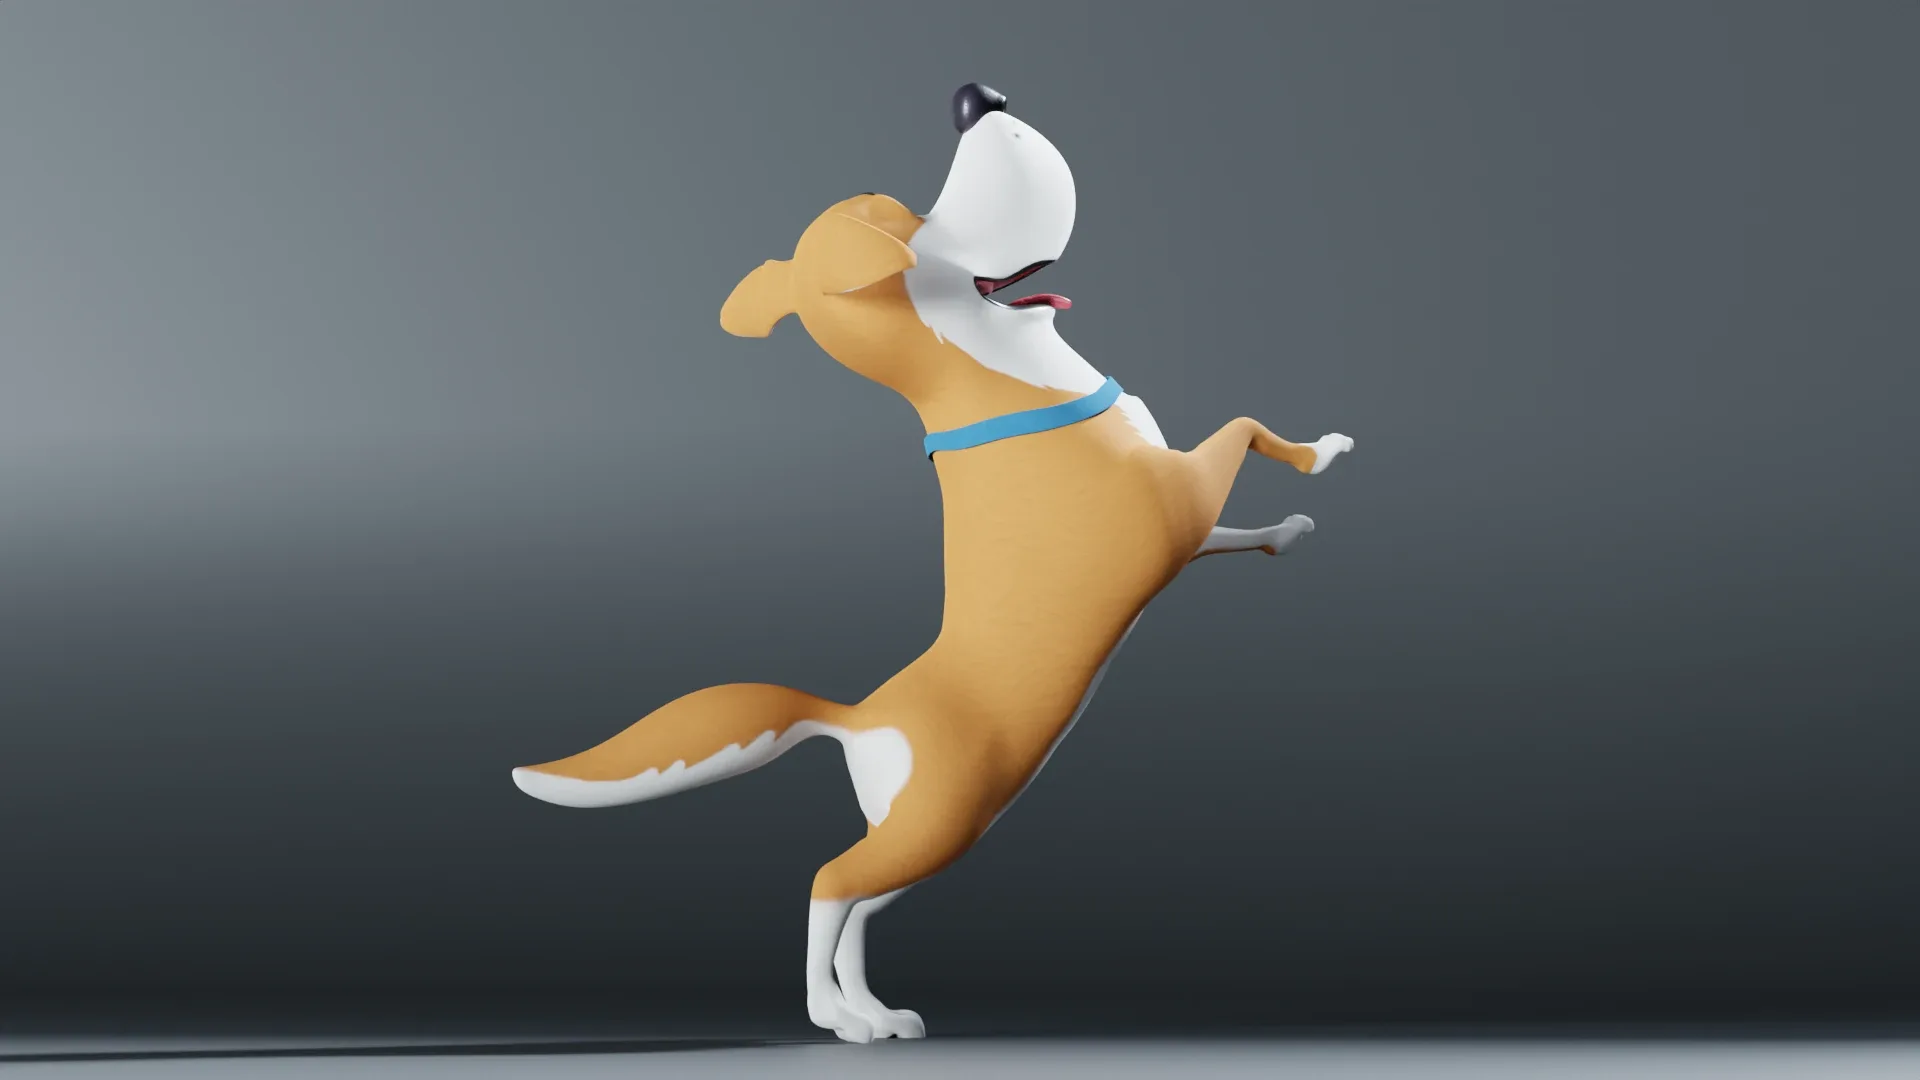 Golden retriever - A cartoon dog rigged animal 3d model for Blender